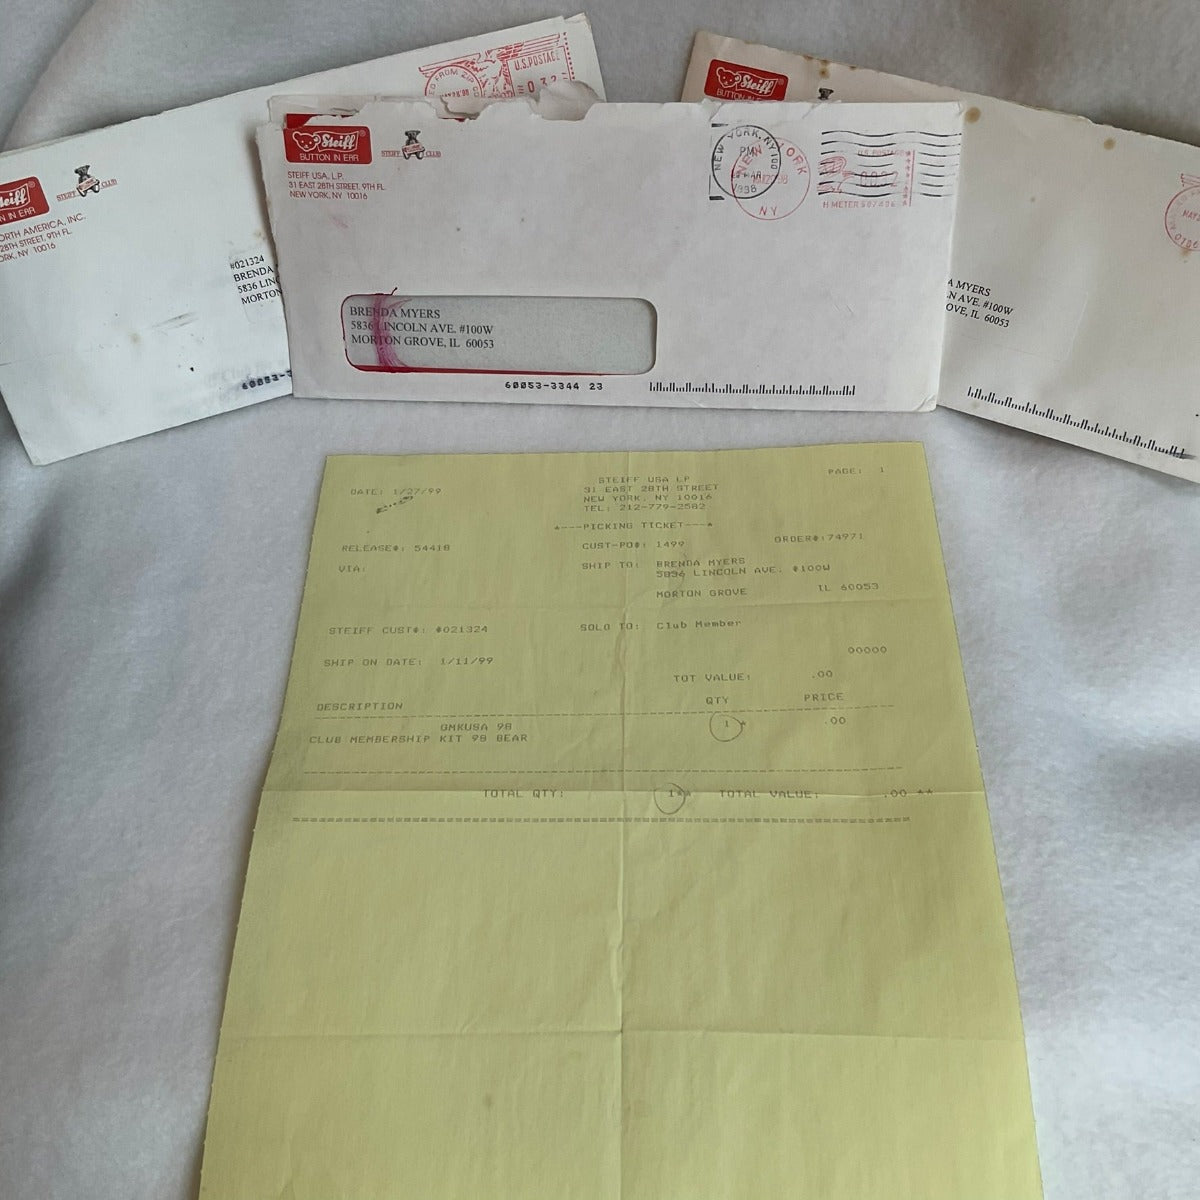 1998 Steiff Club Gift Membership Kit - Papers